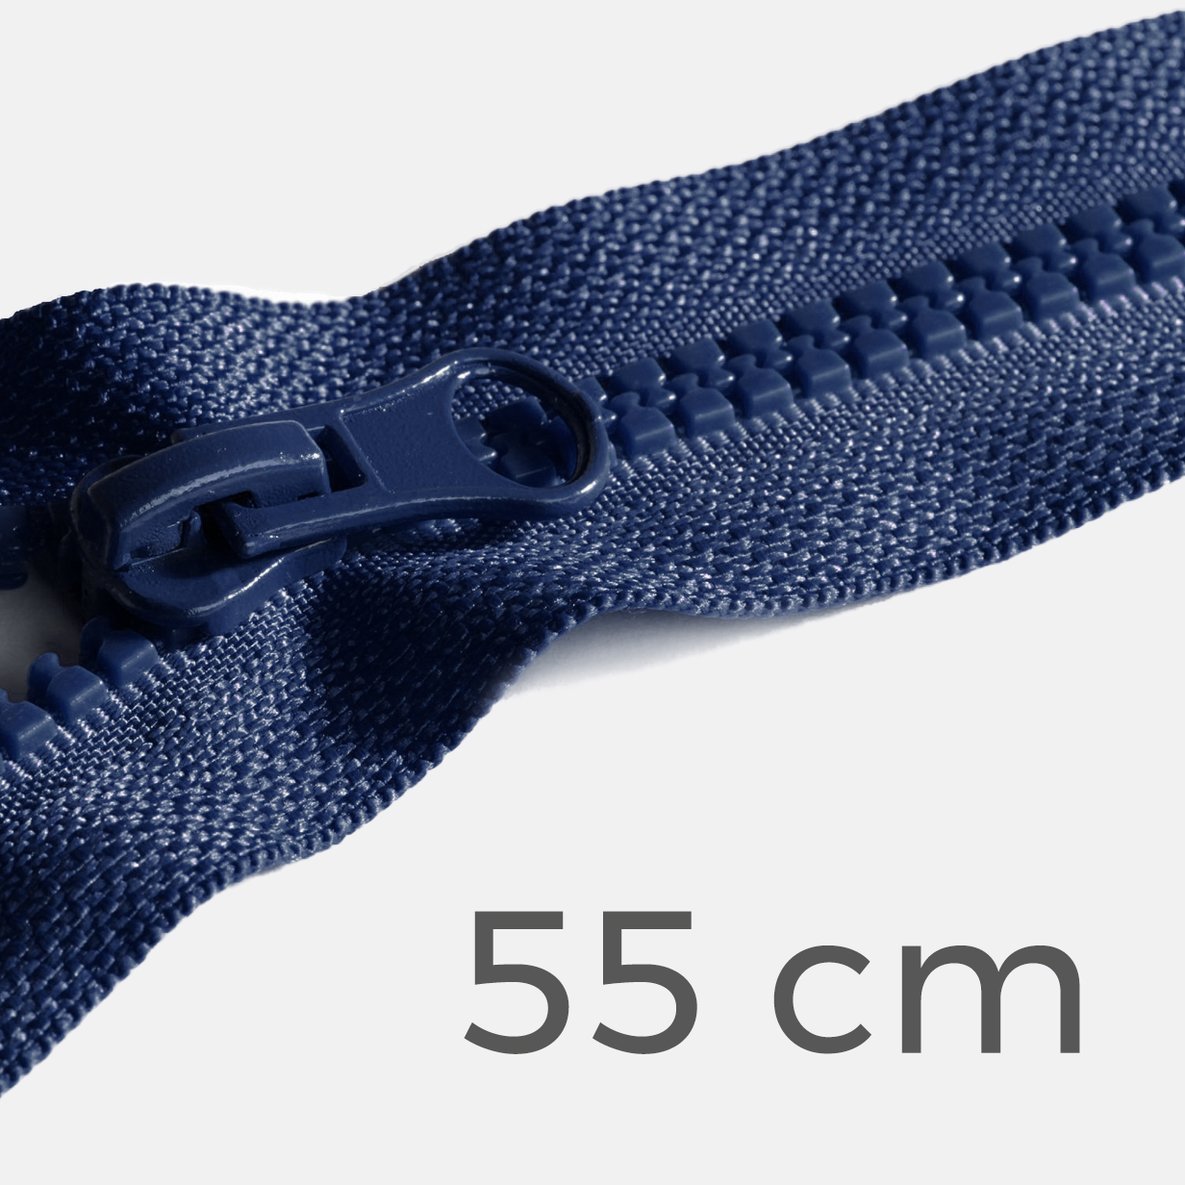 Jacken-Reißverschluss teilbar 55 cm, marineblau